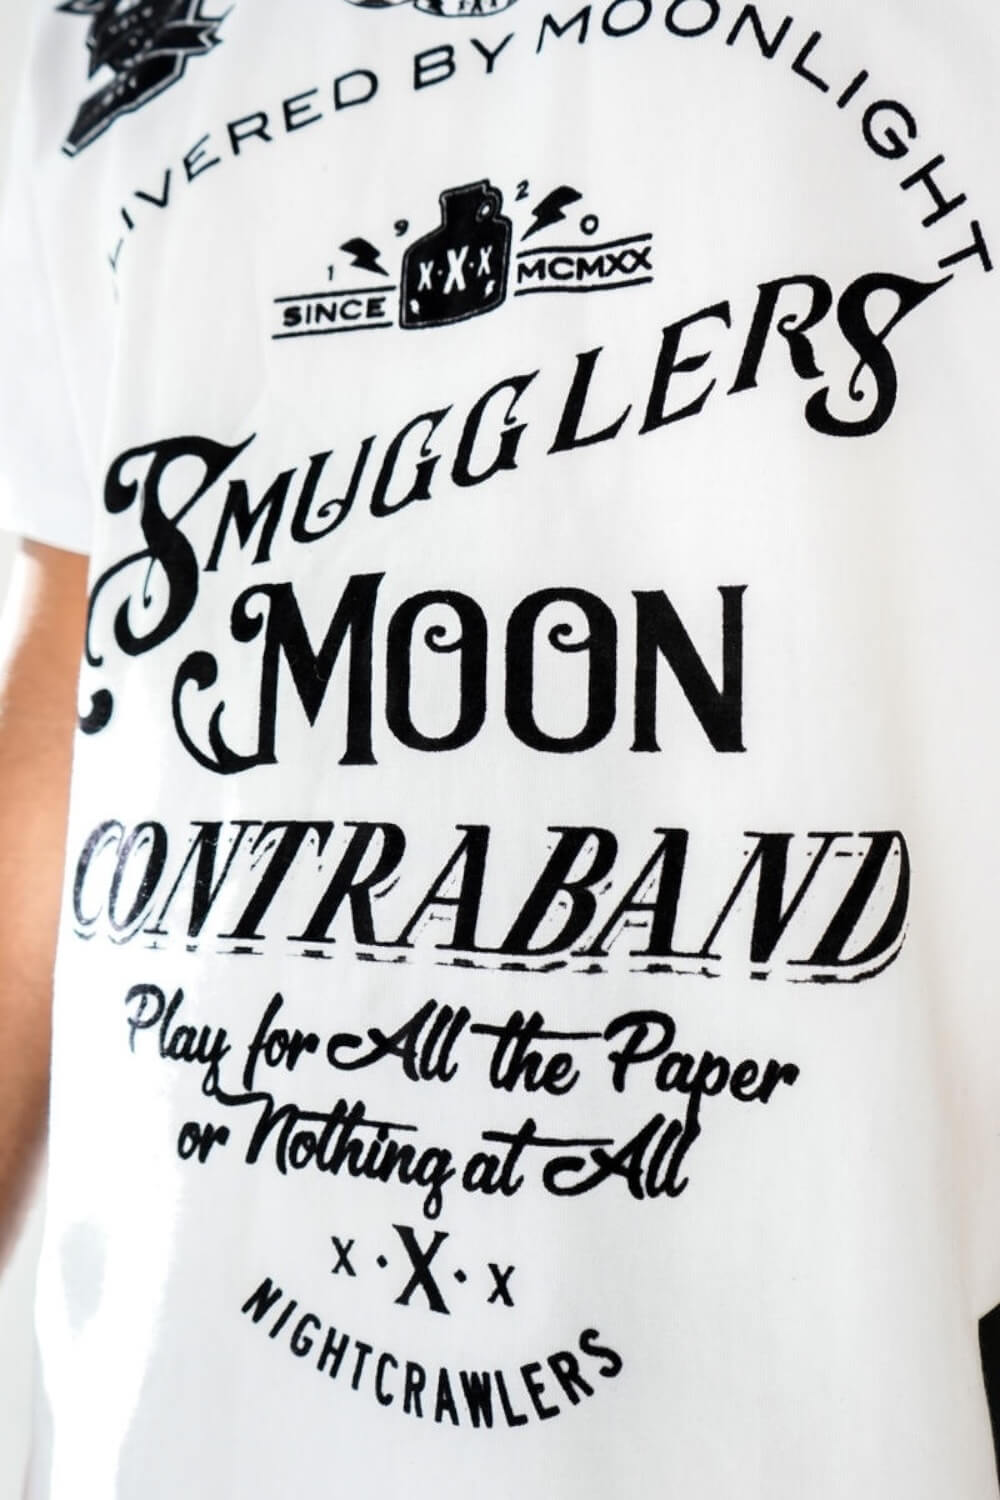 Smugglers Moon T-shirt- White